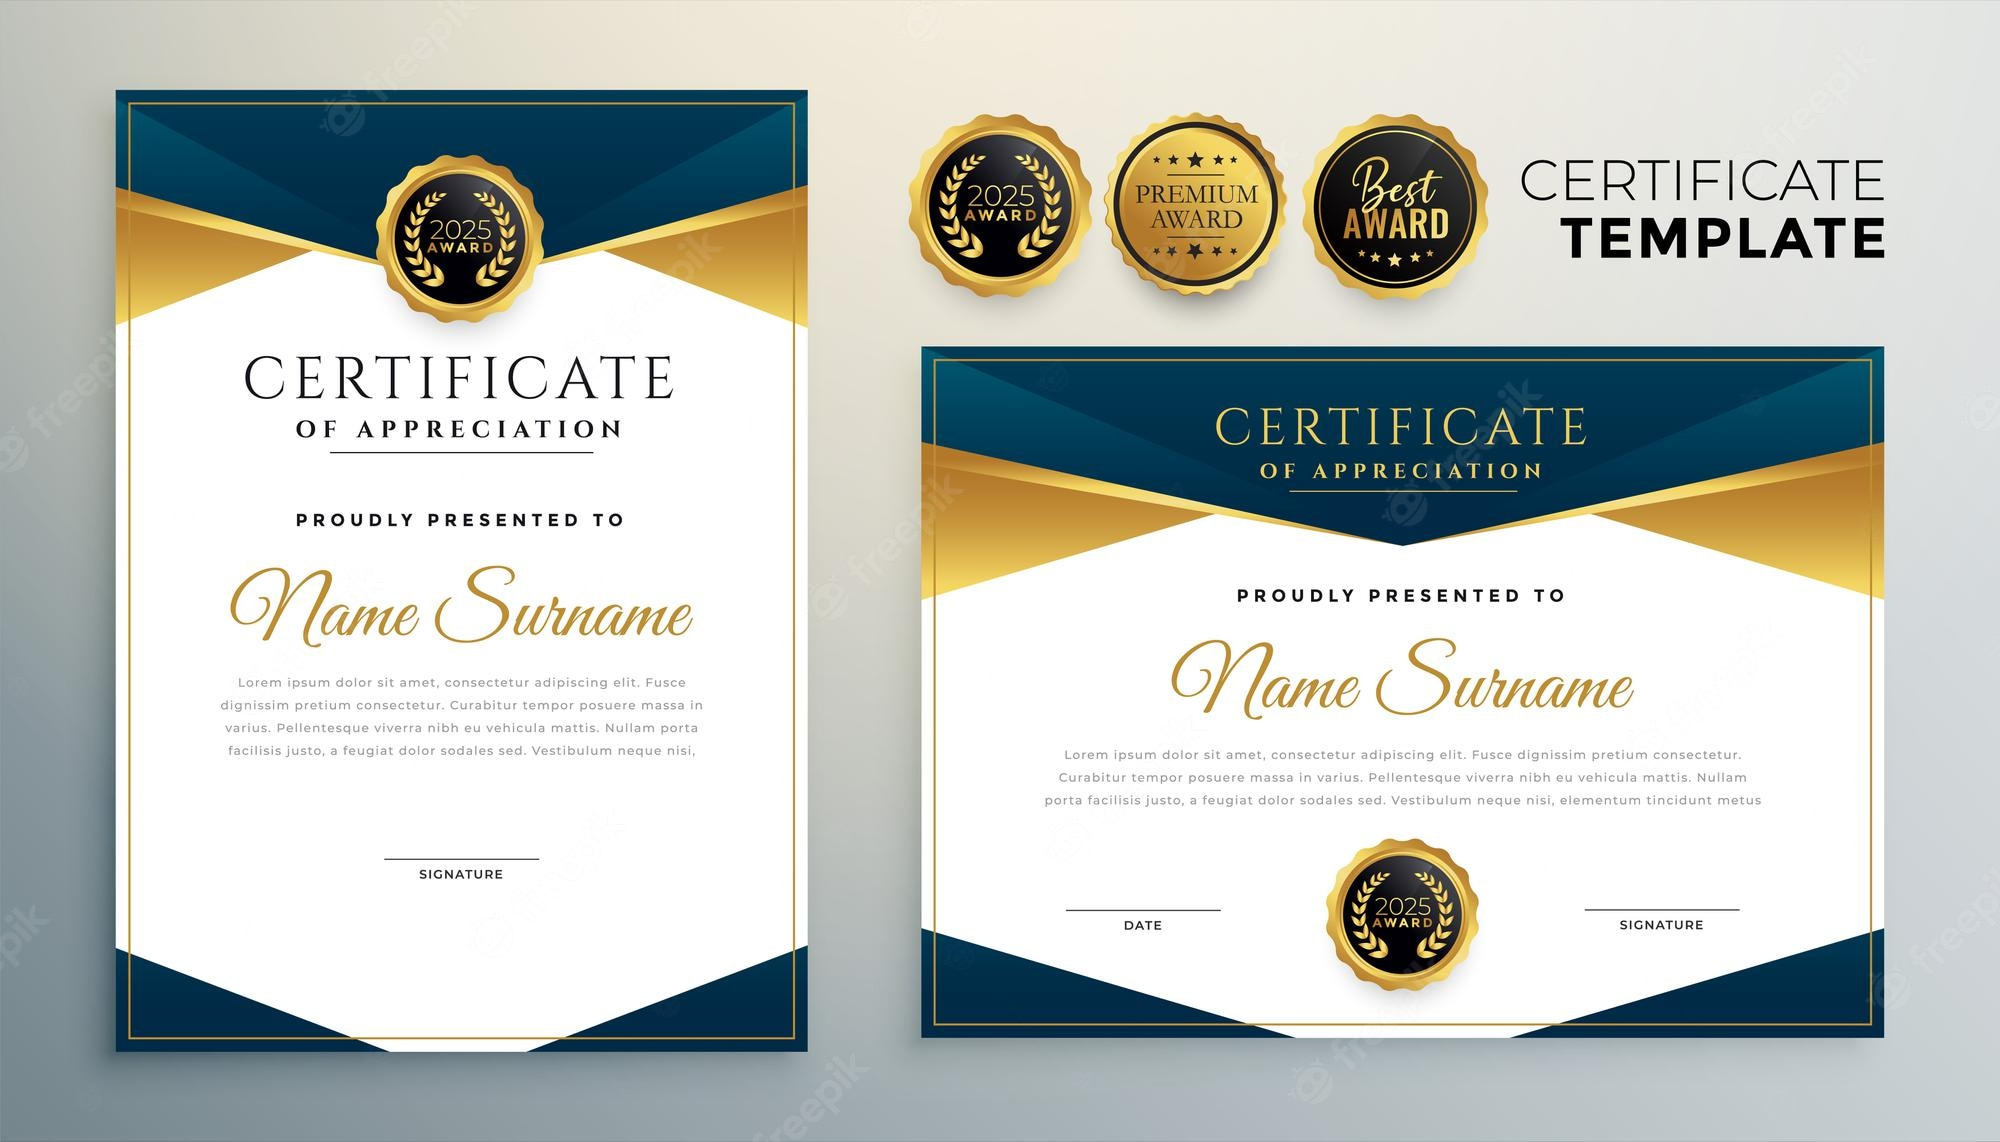 Certificate Images - Free Download on Freepik With Regard To Sample Award Certificates Templates